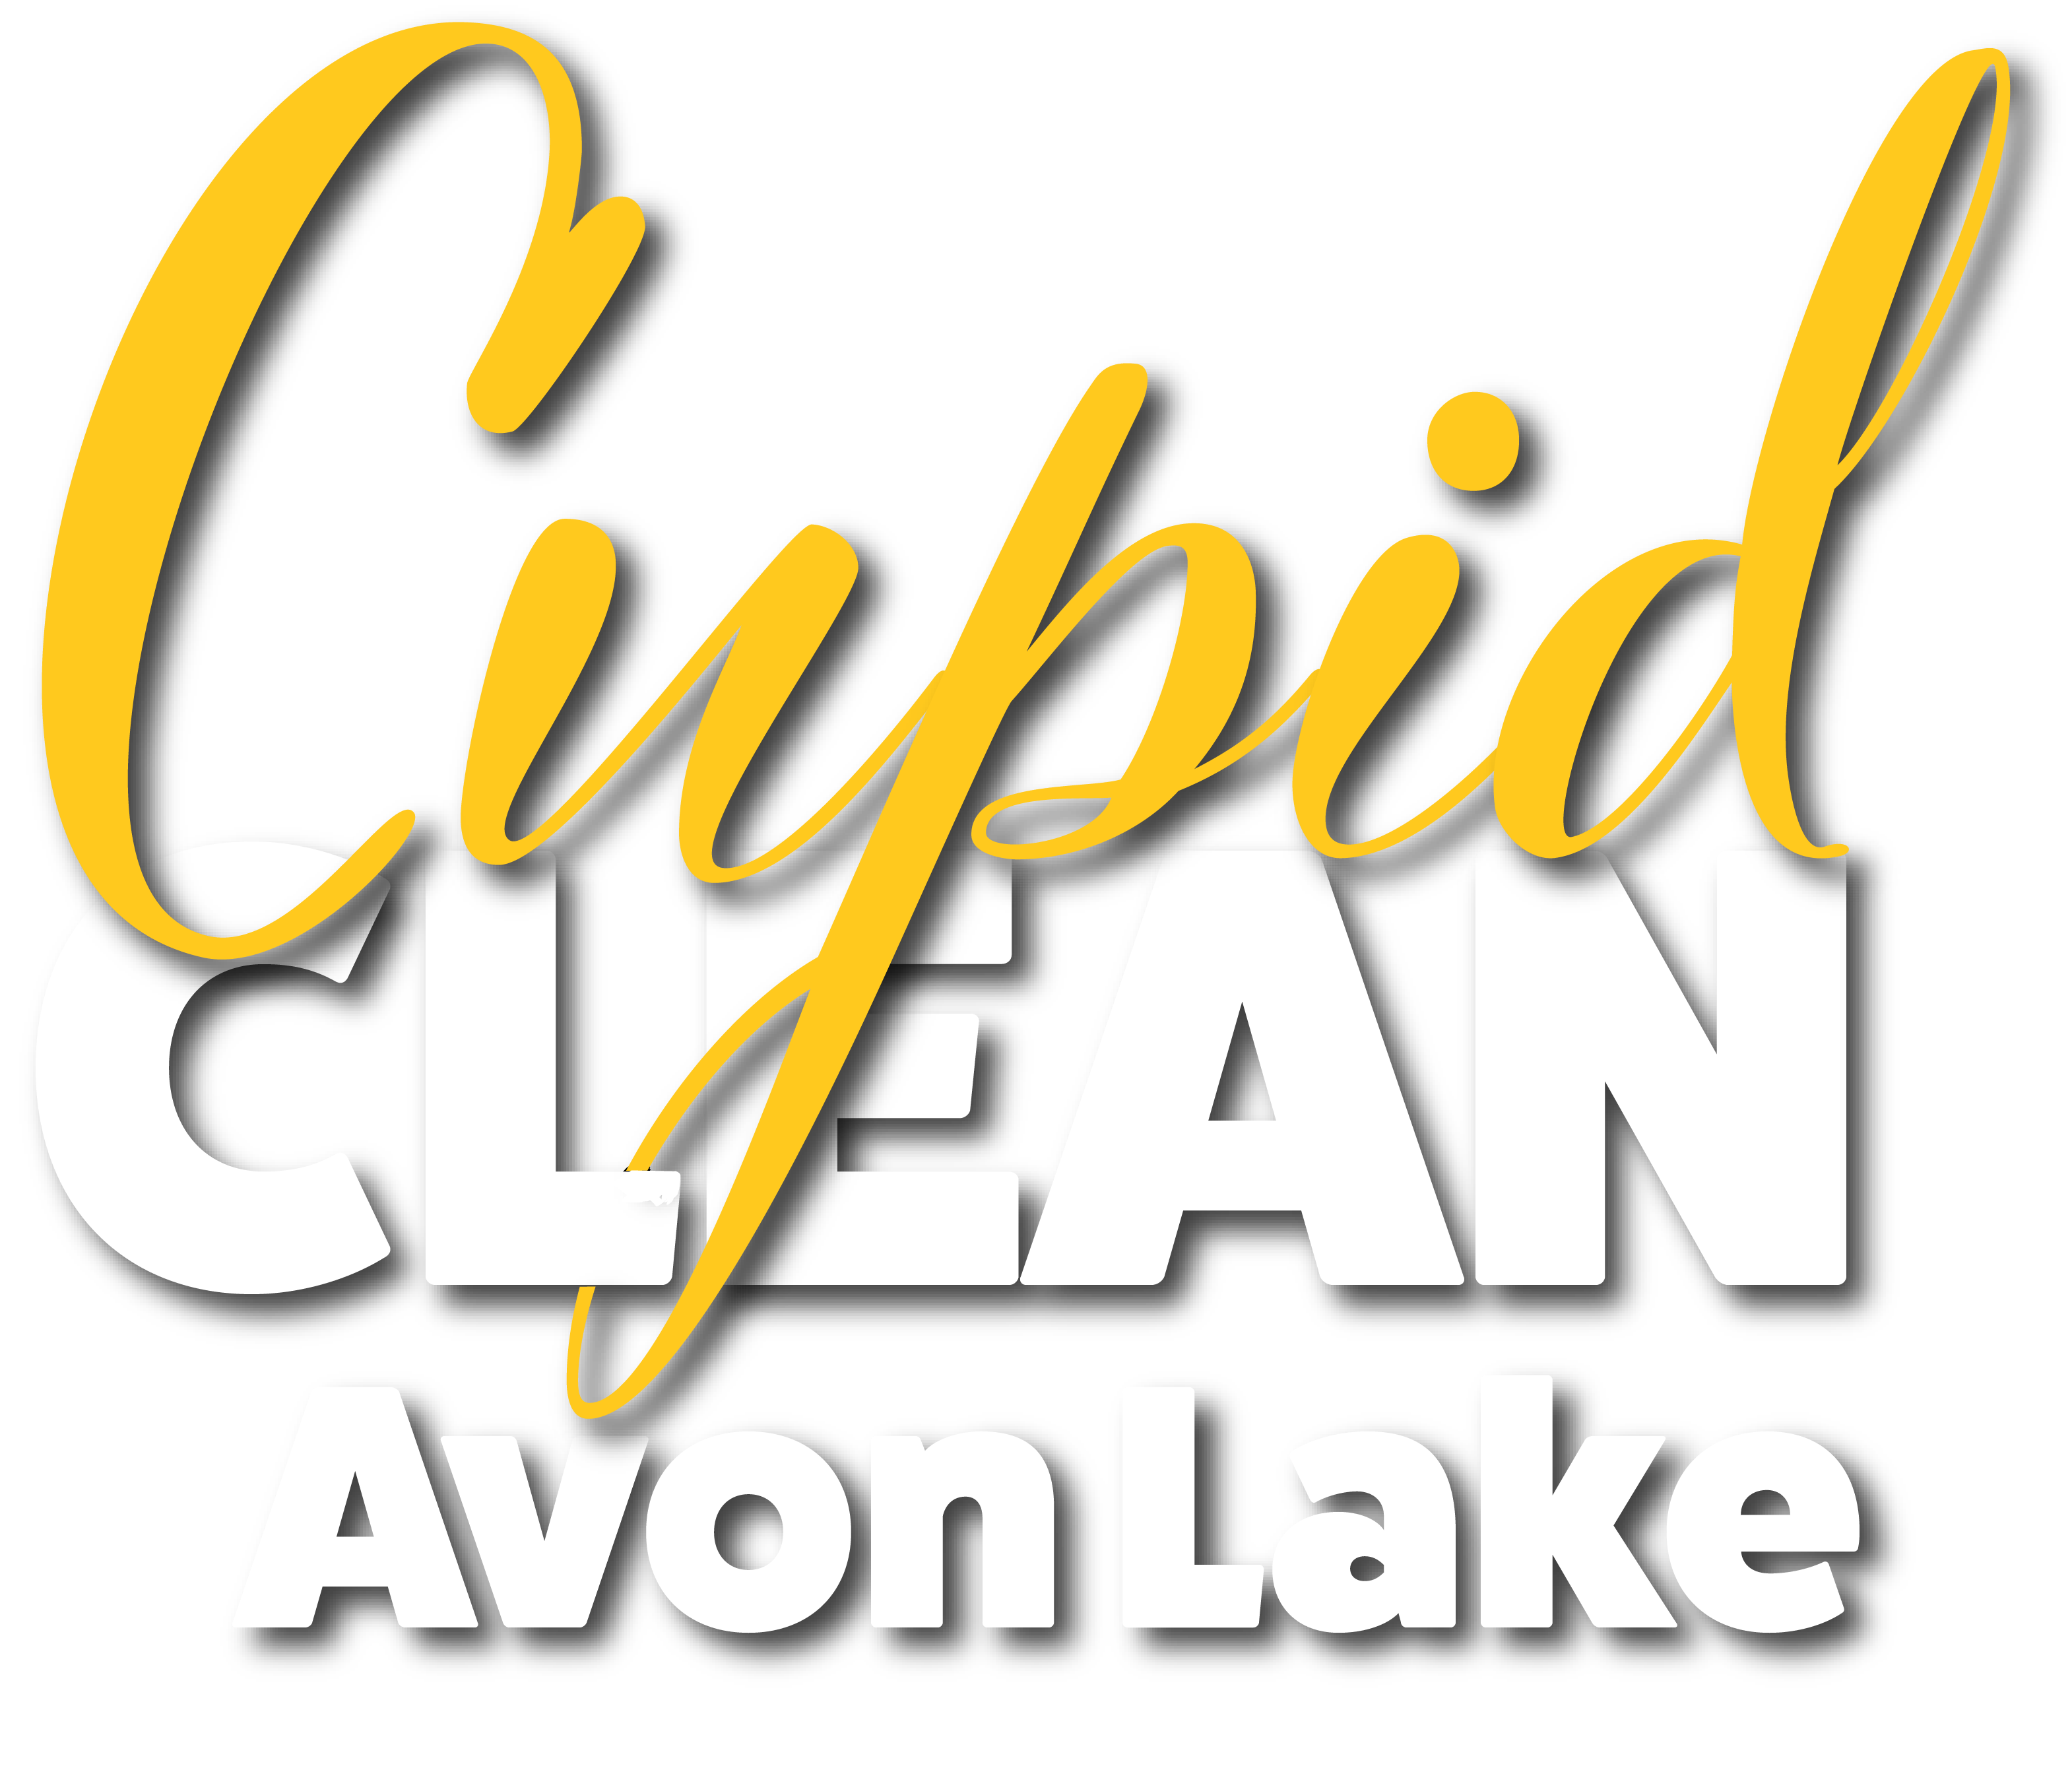 house cleaning avon lake